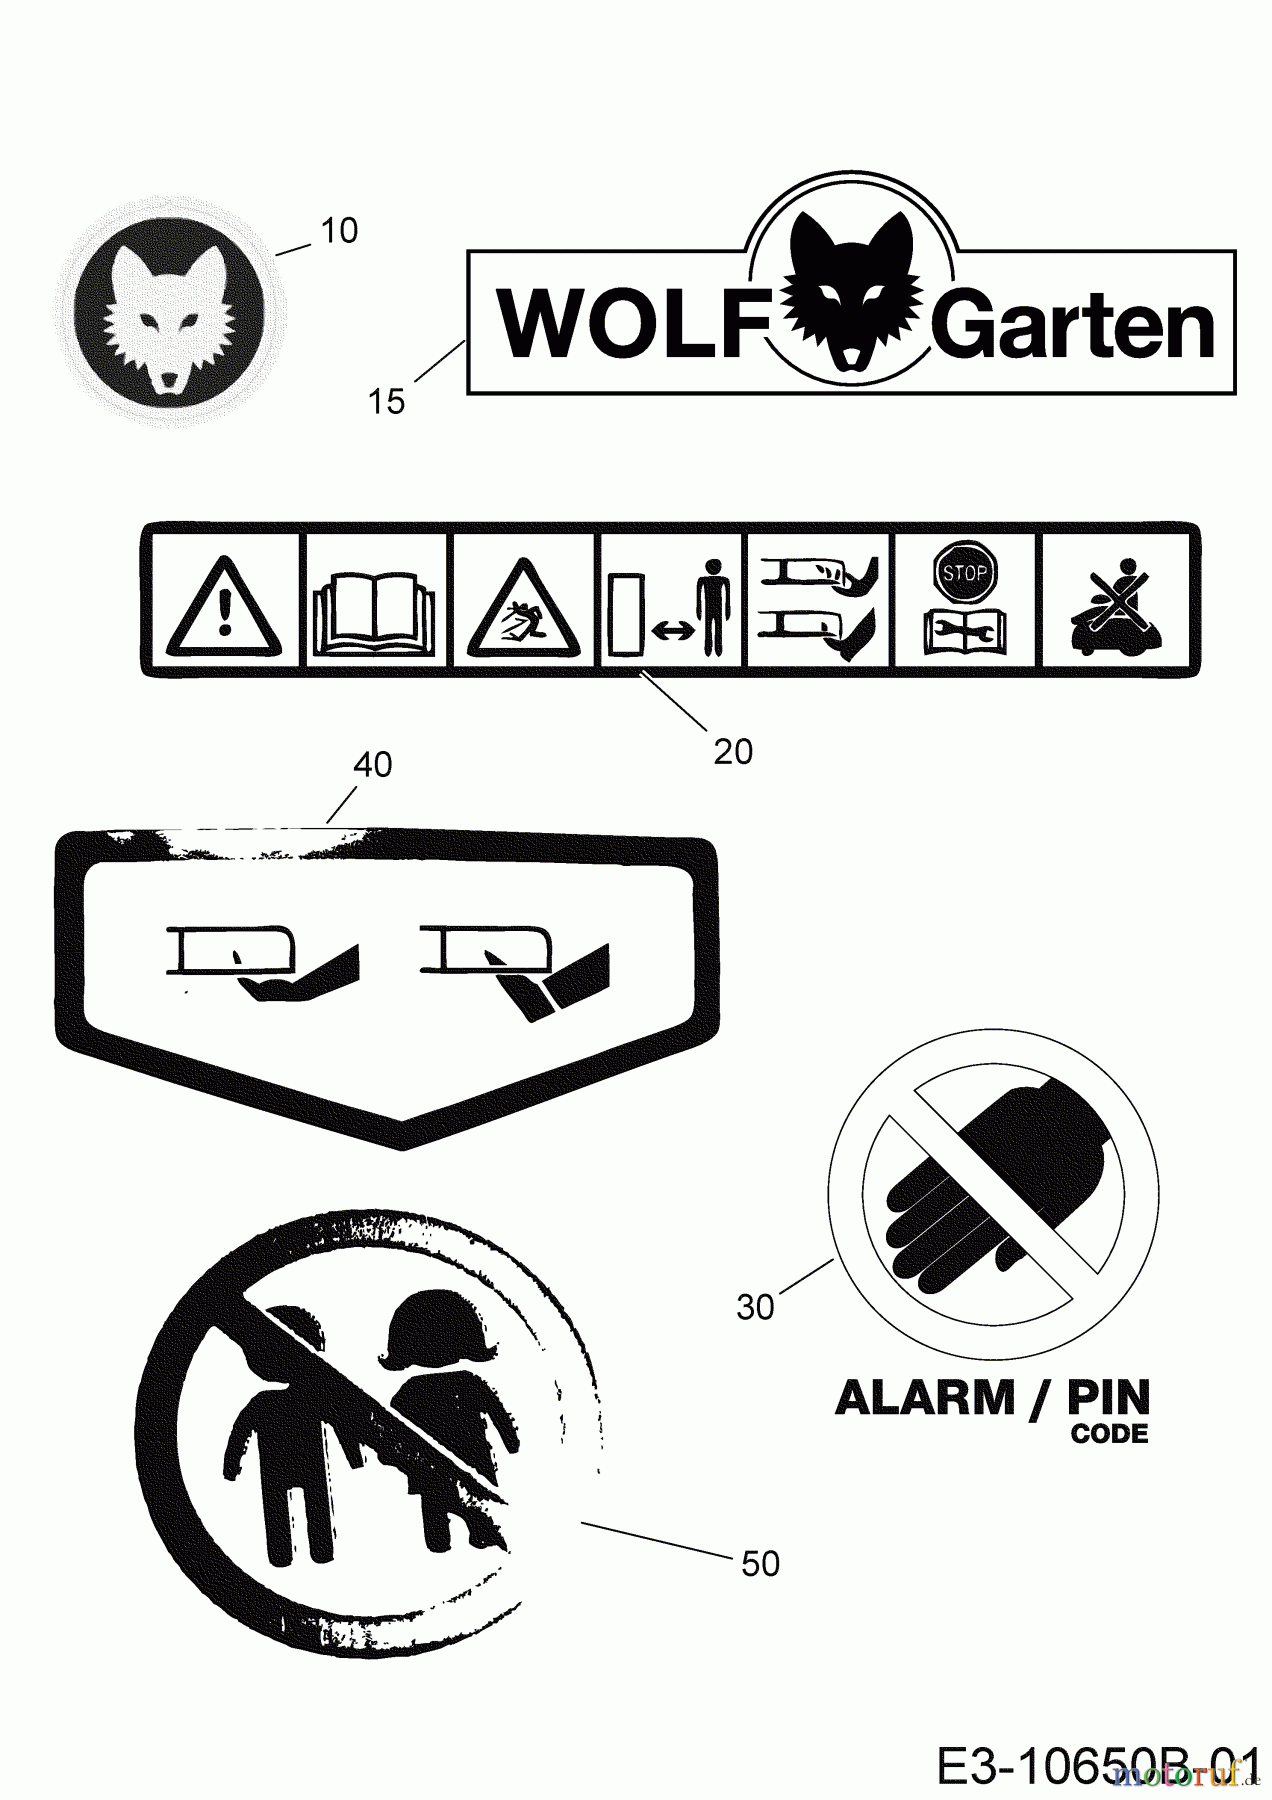  Wolf-Garten Robotic lawn mower Loopo S500 22AXGA-A650  (2019) Labels